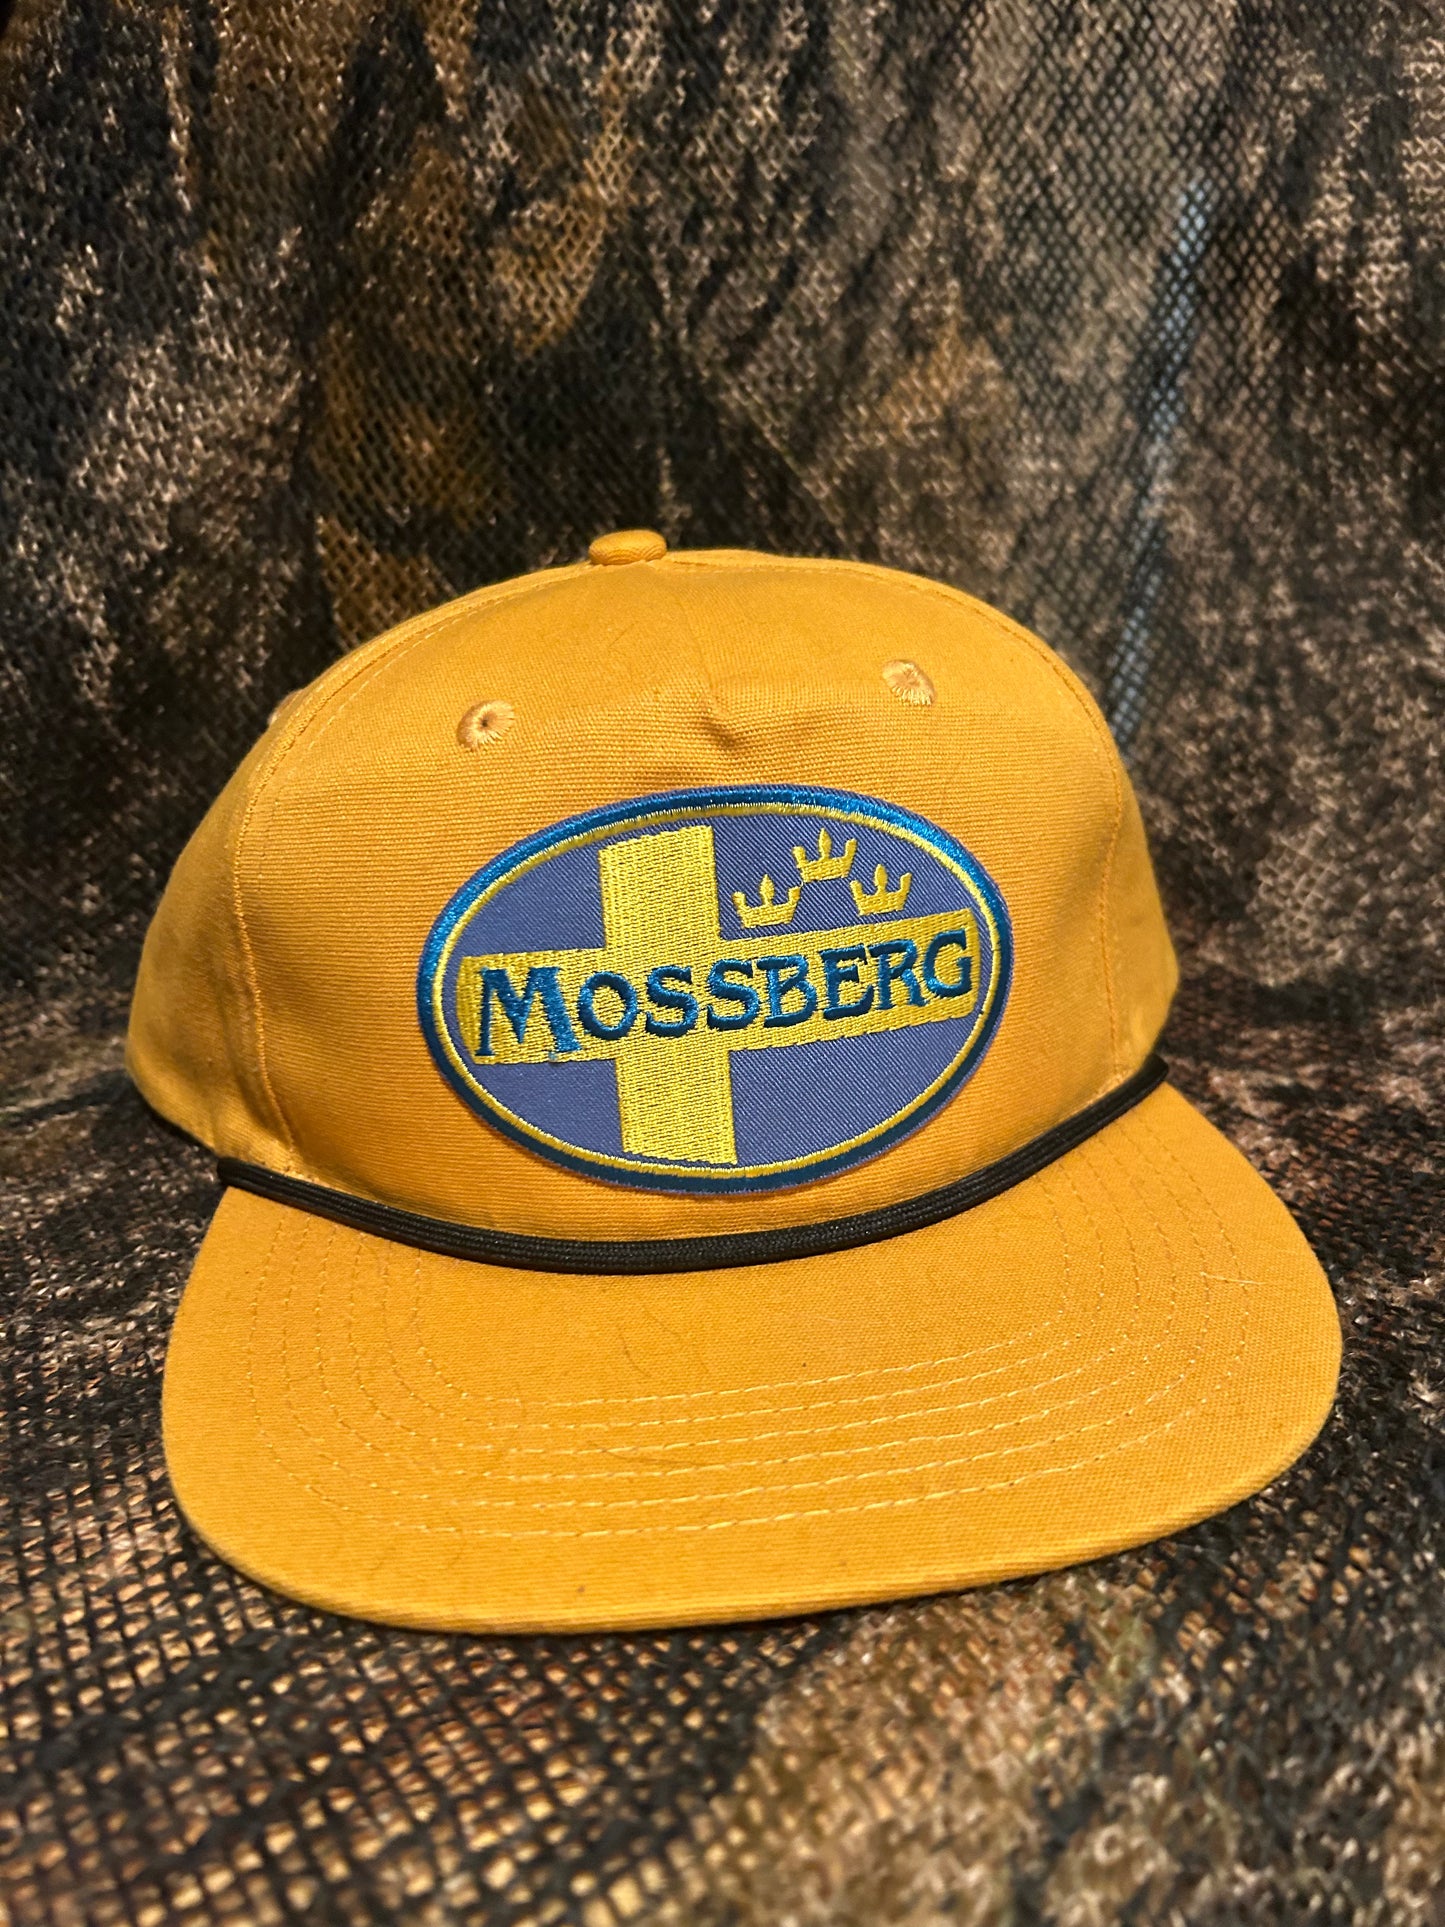 Mossberg yellow SnapBack hat